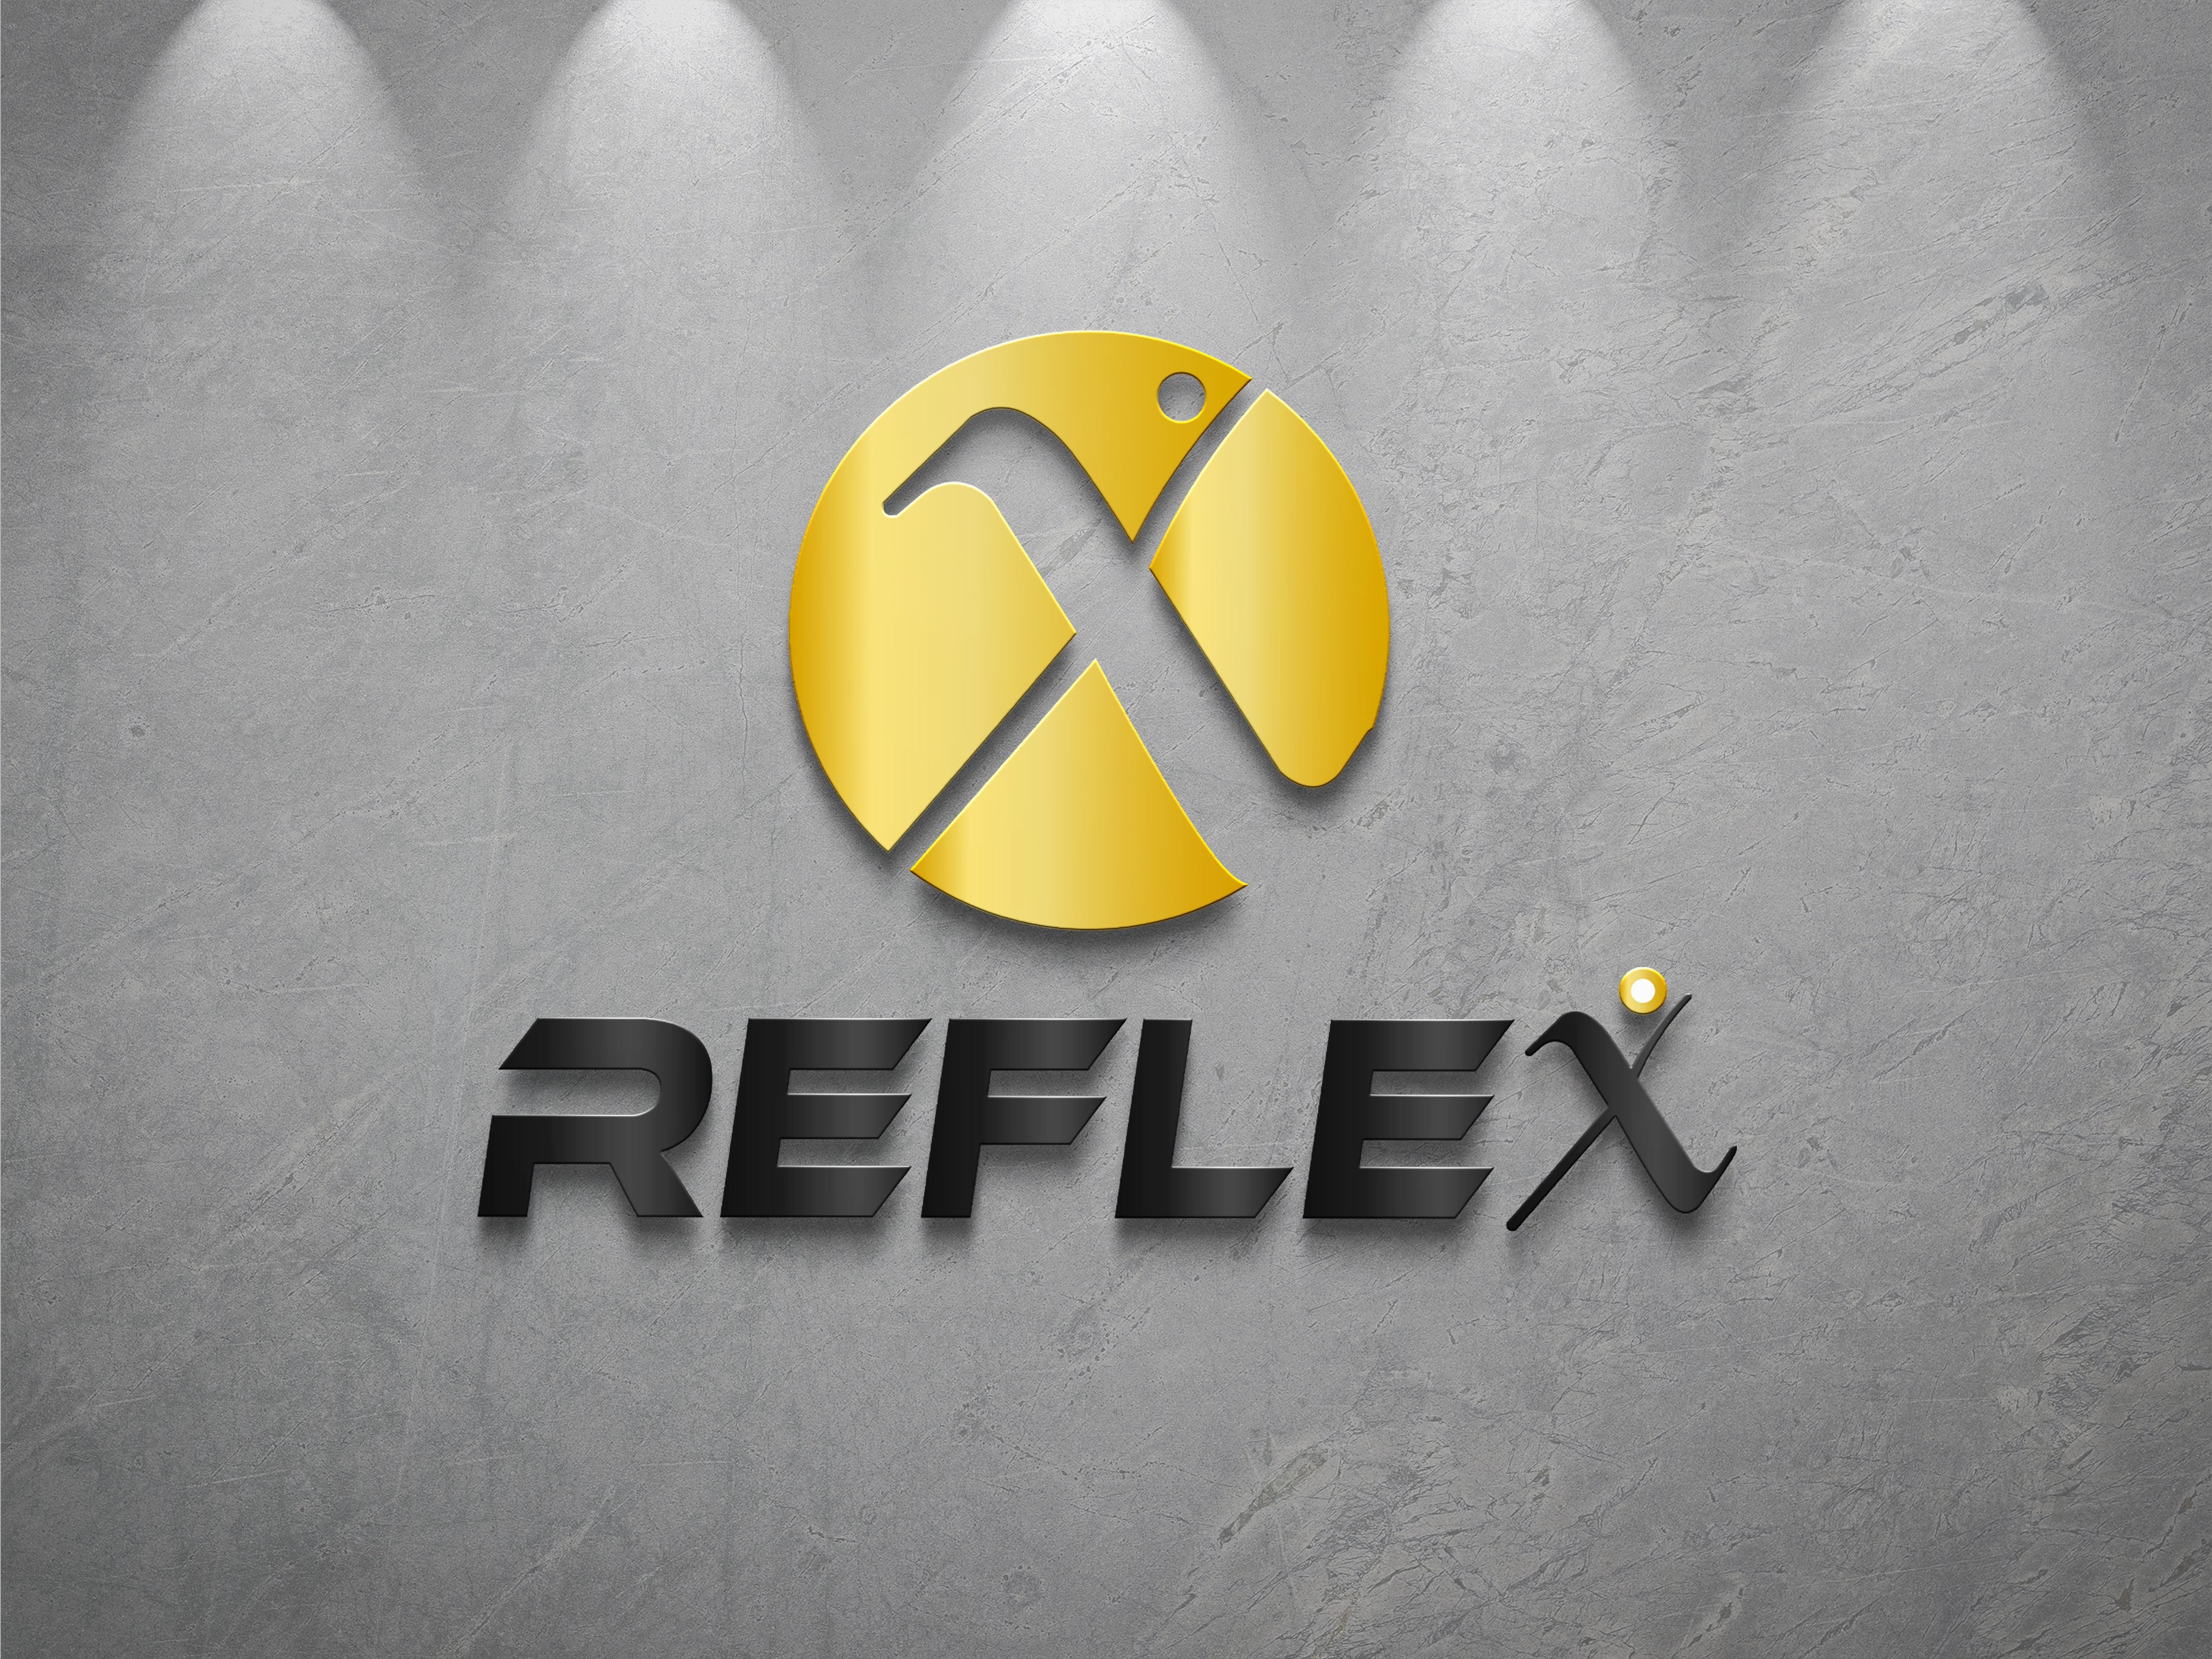 Reflex sports